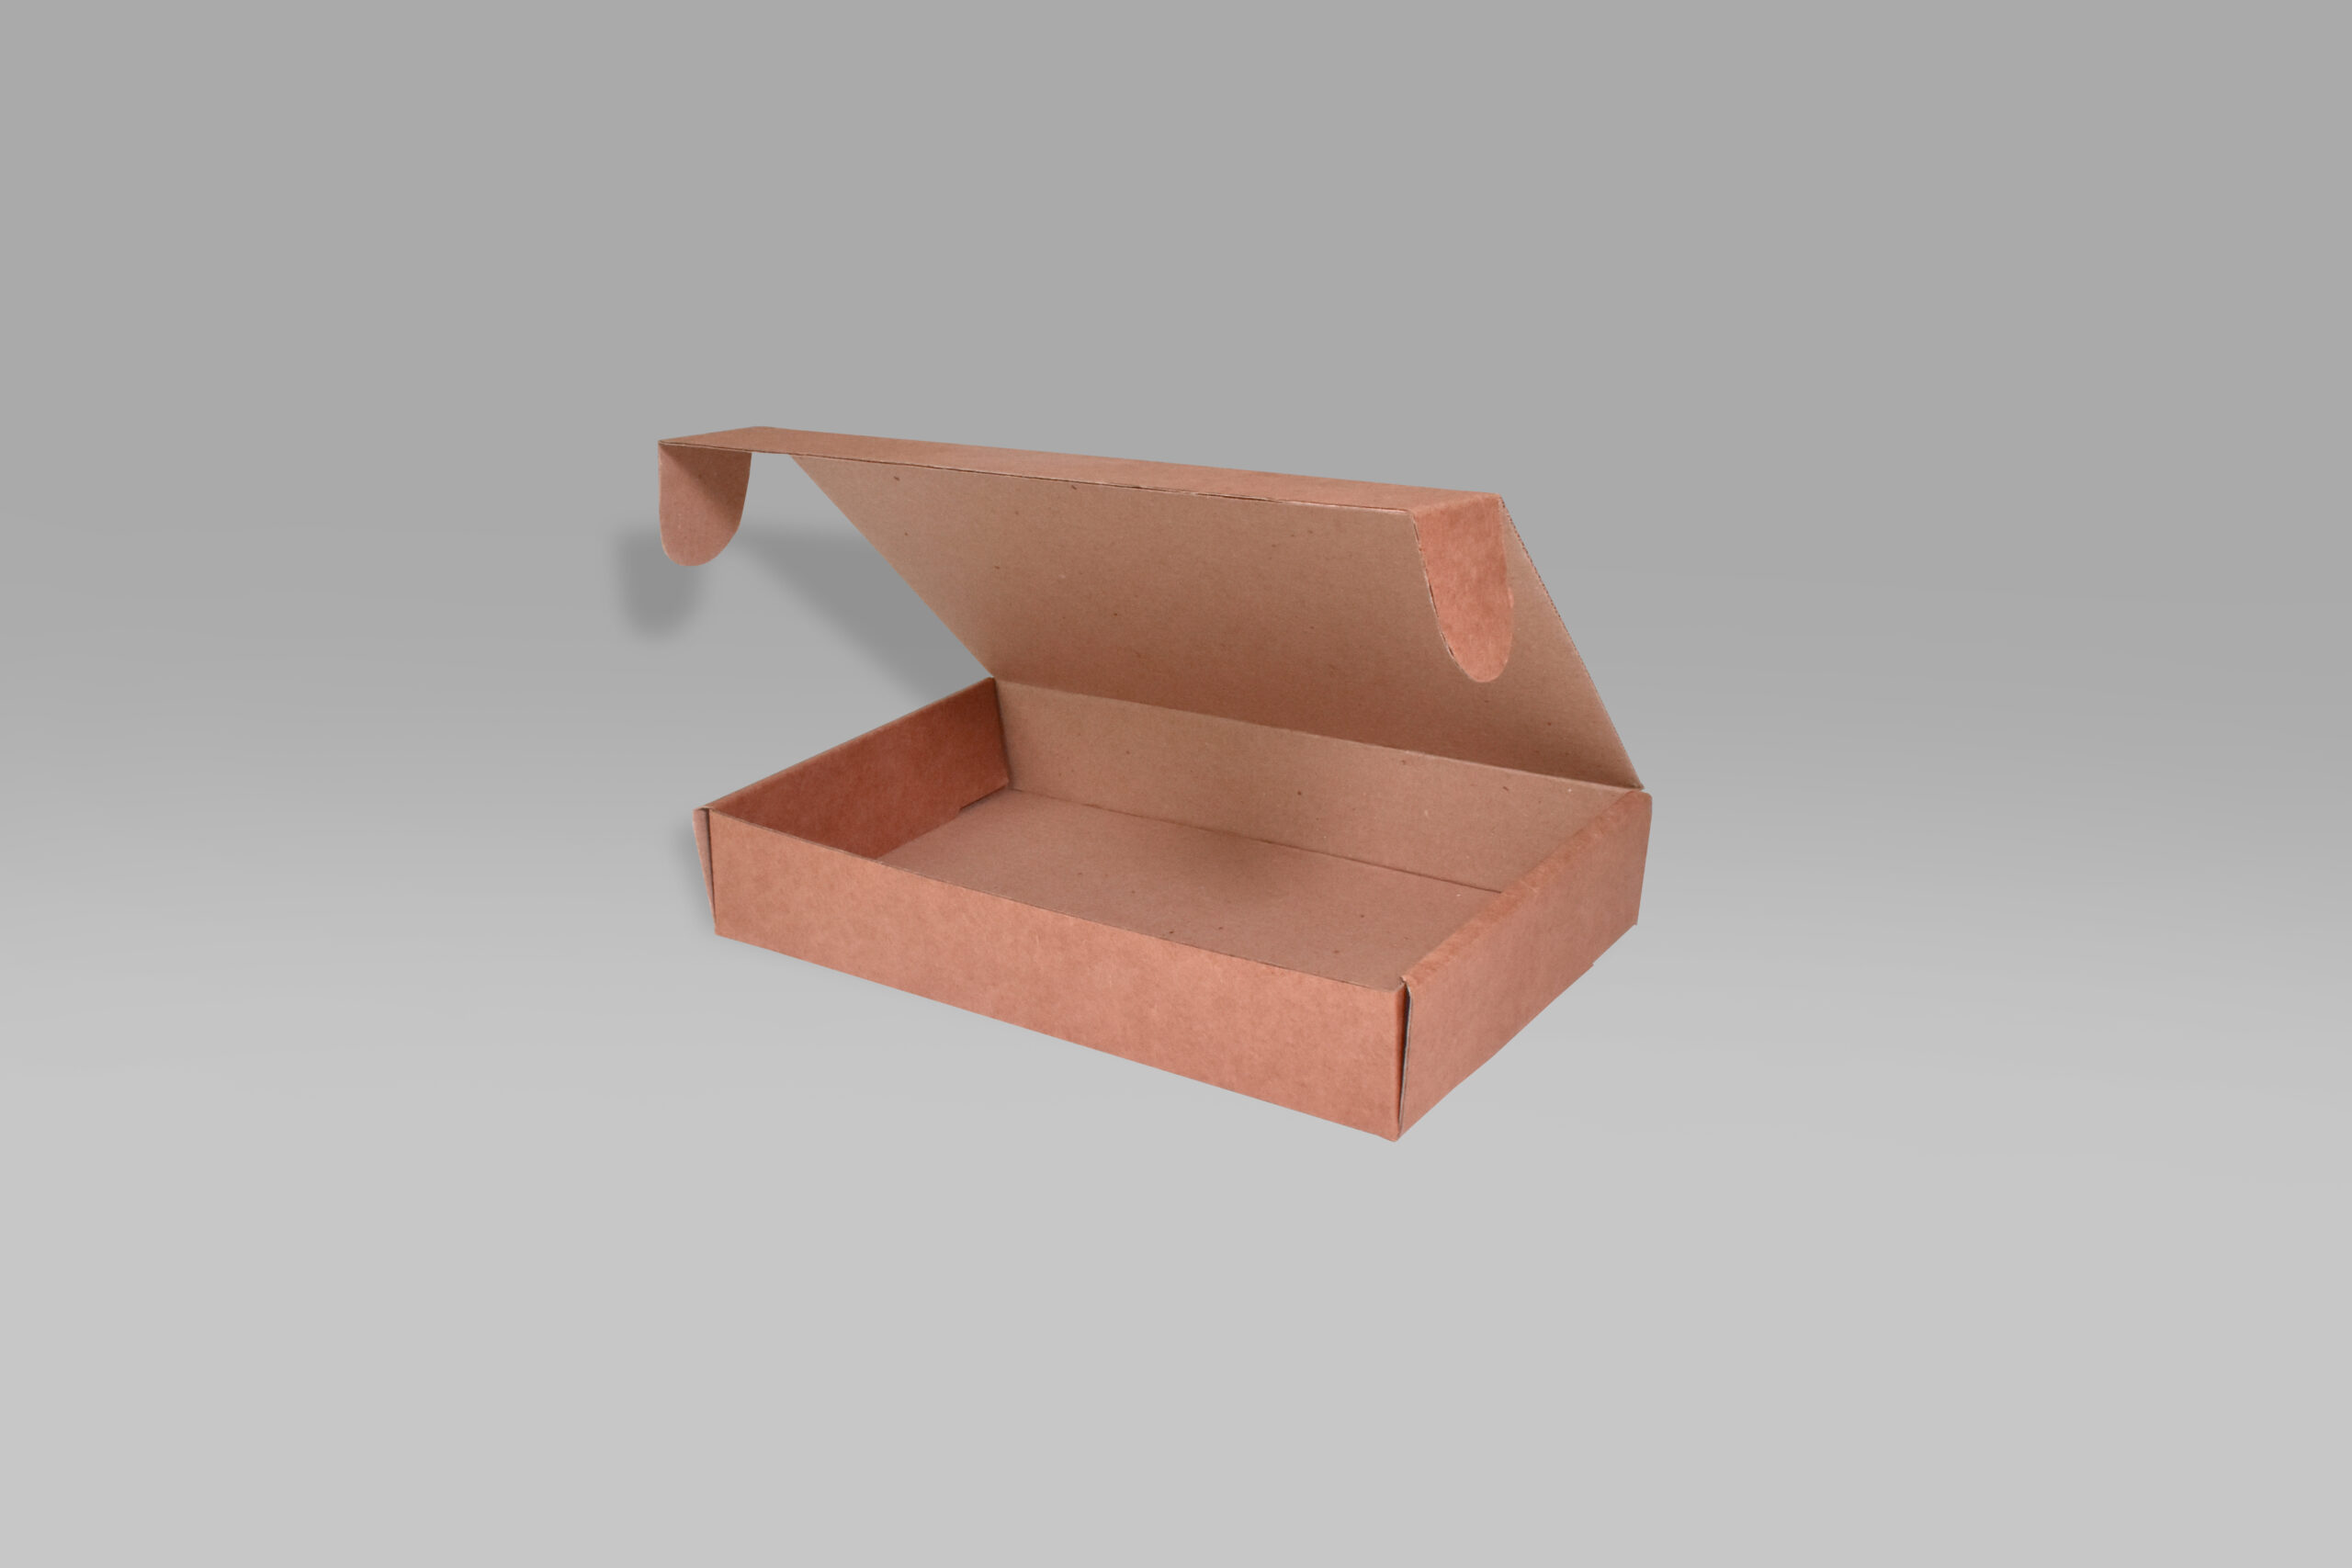 Caja Armable 23.0 X 14.0 X 4.0 cm – 10 Piezas